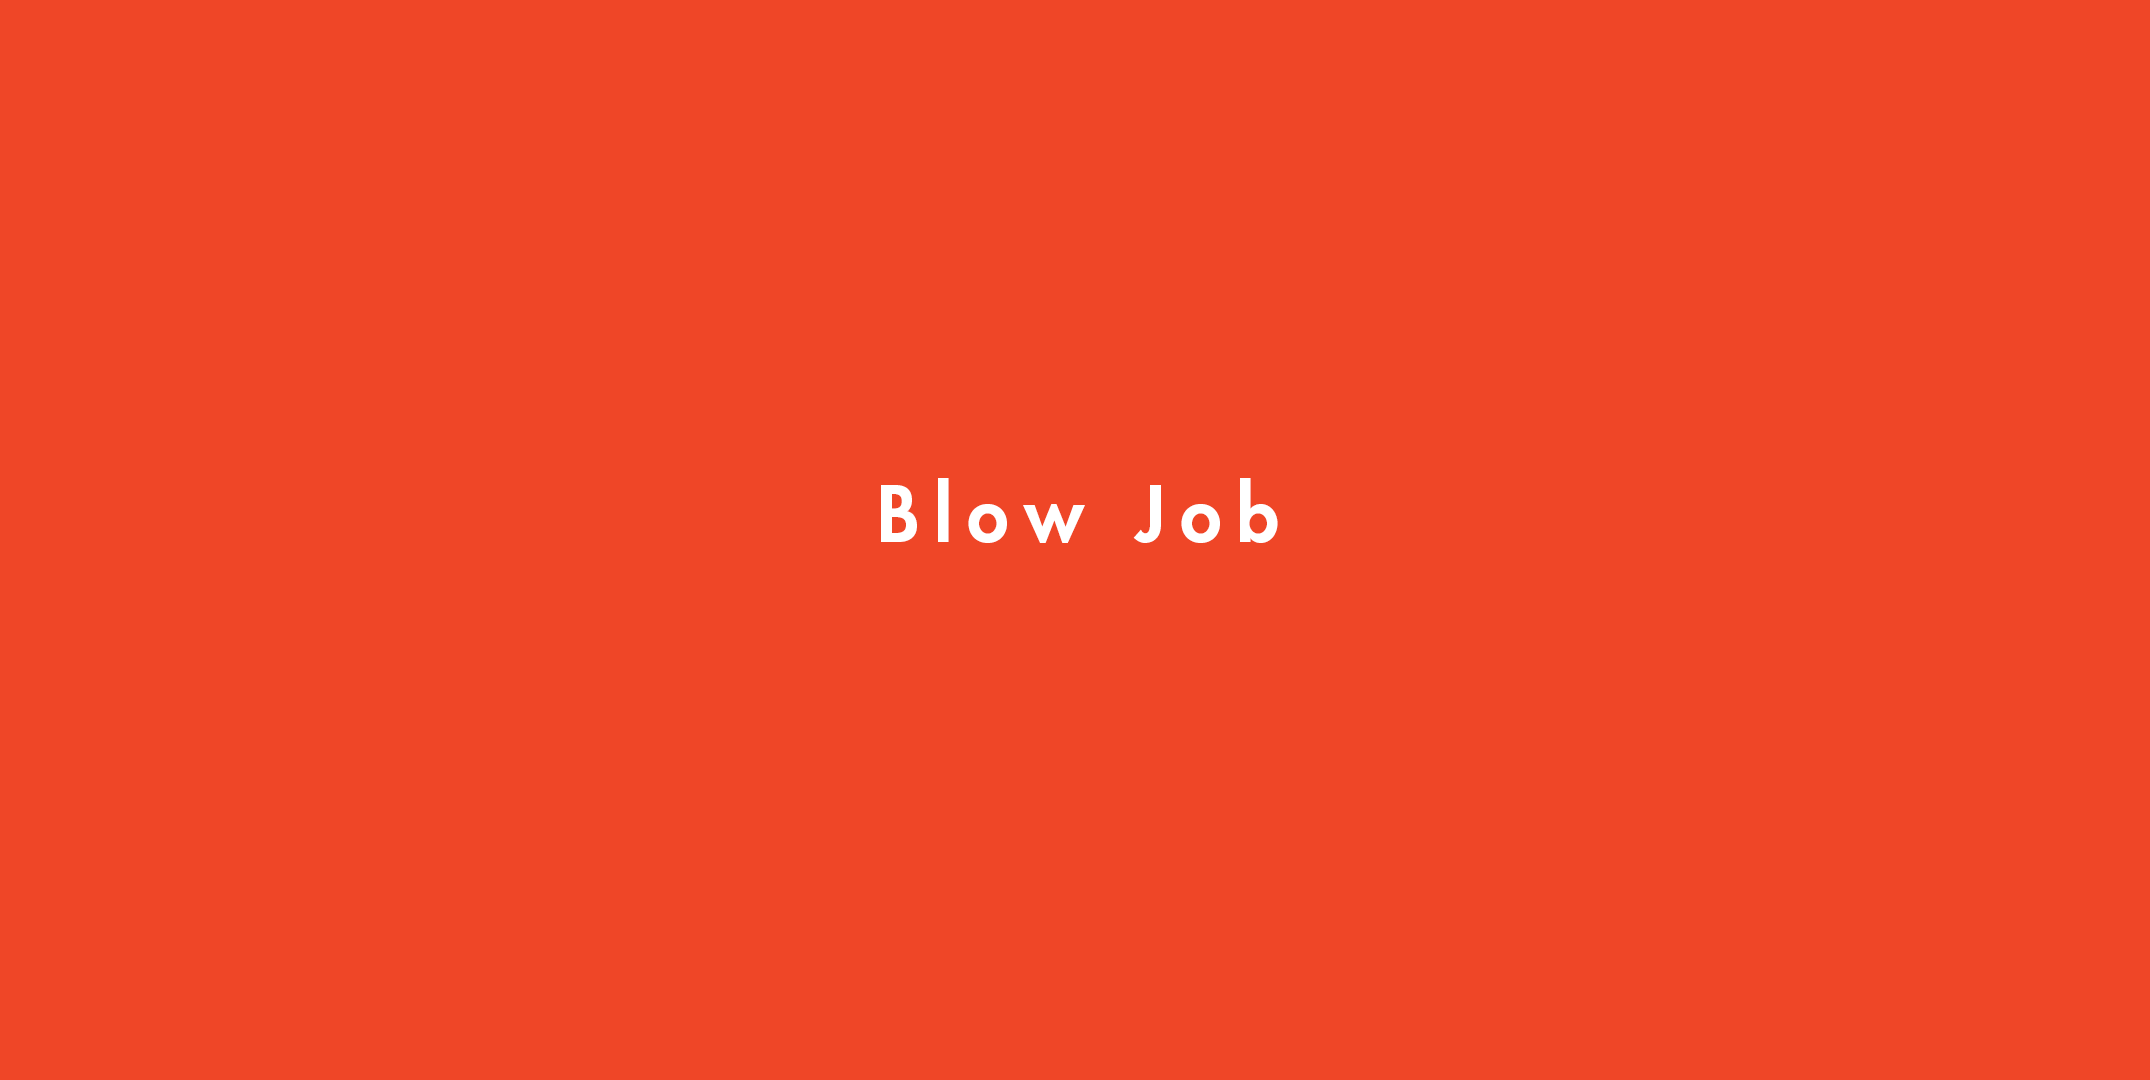 Blow Job Definition photo image